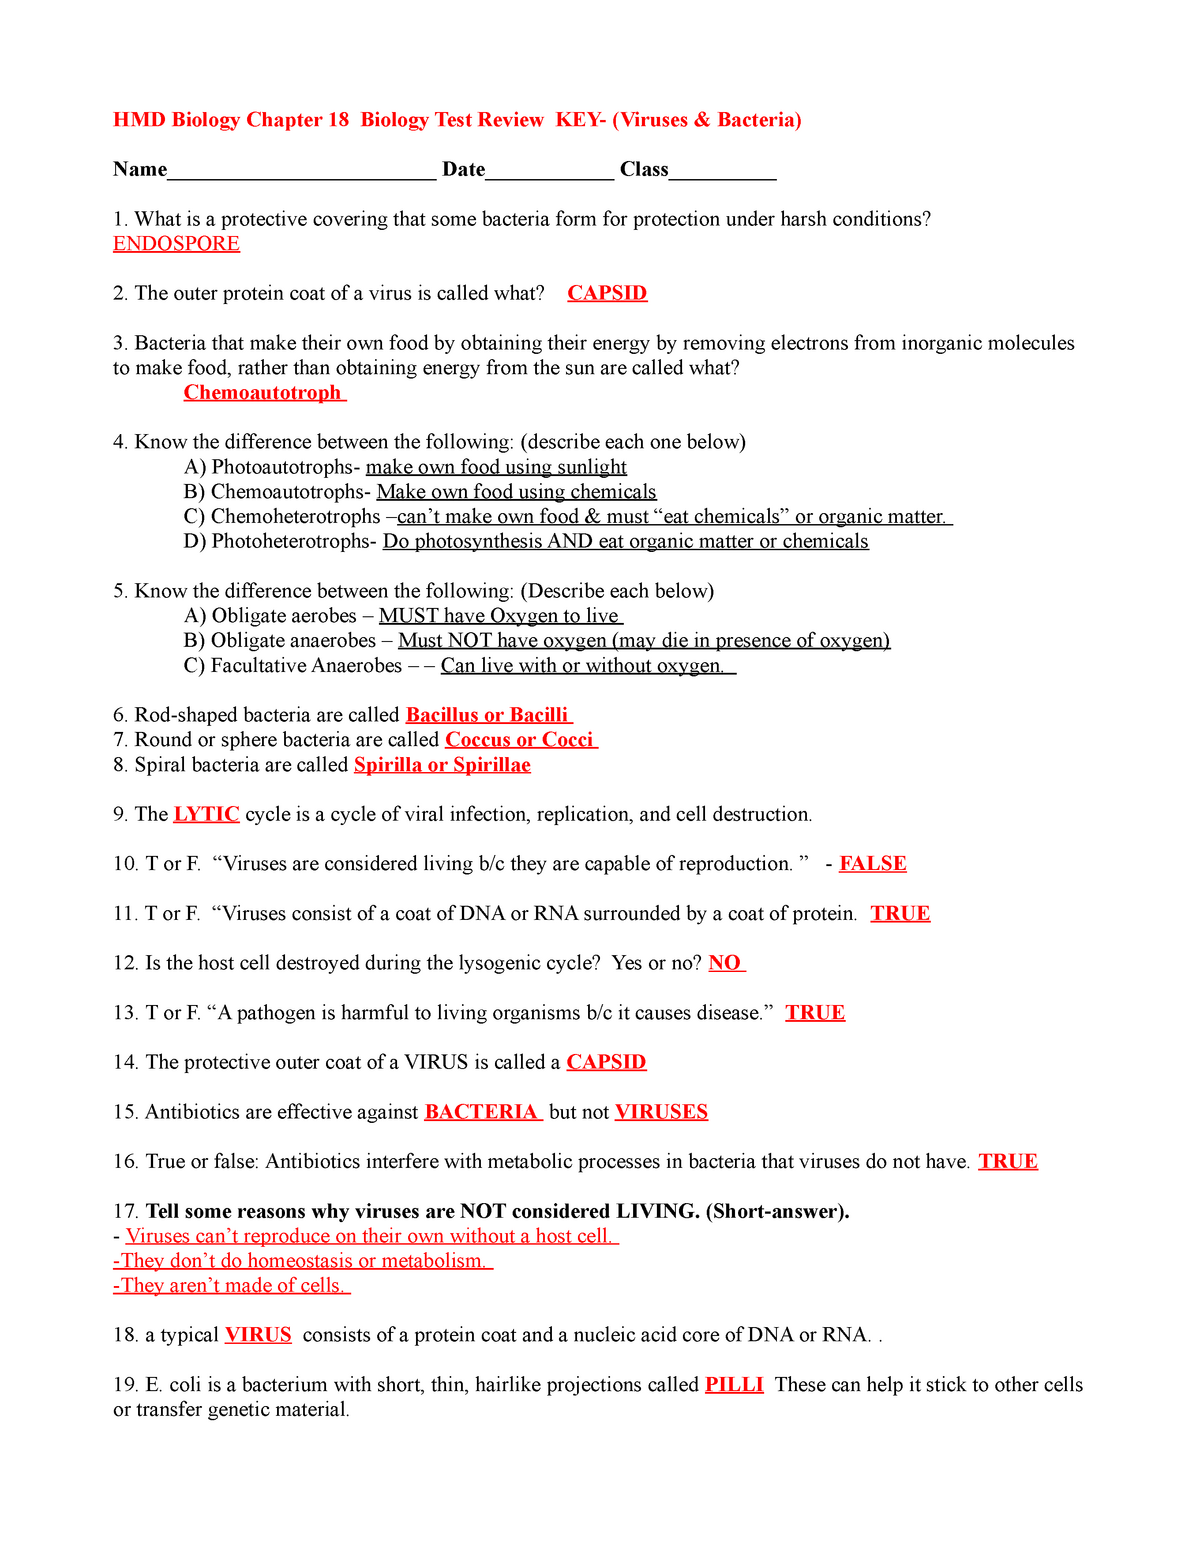 HMD Ch 20 Bio Test Review KEY - HMD Biology Chapter 20 Biology Regarding Virus And Bacteria Worksheet Answers